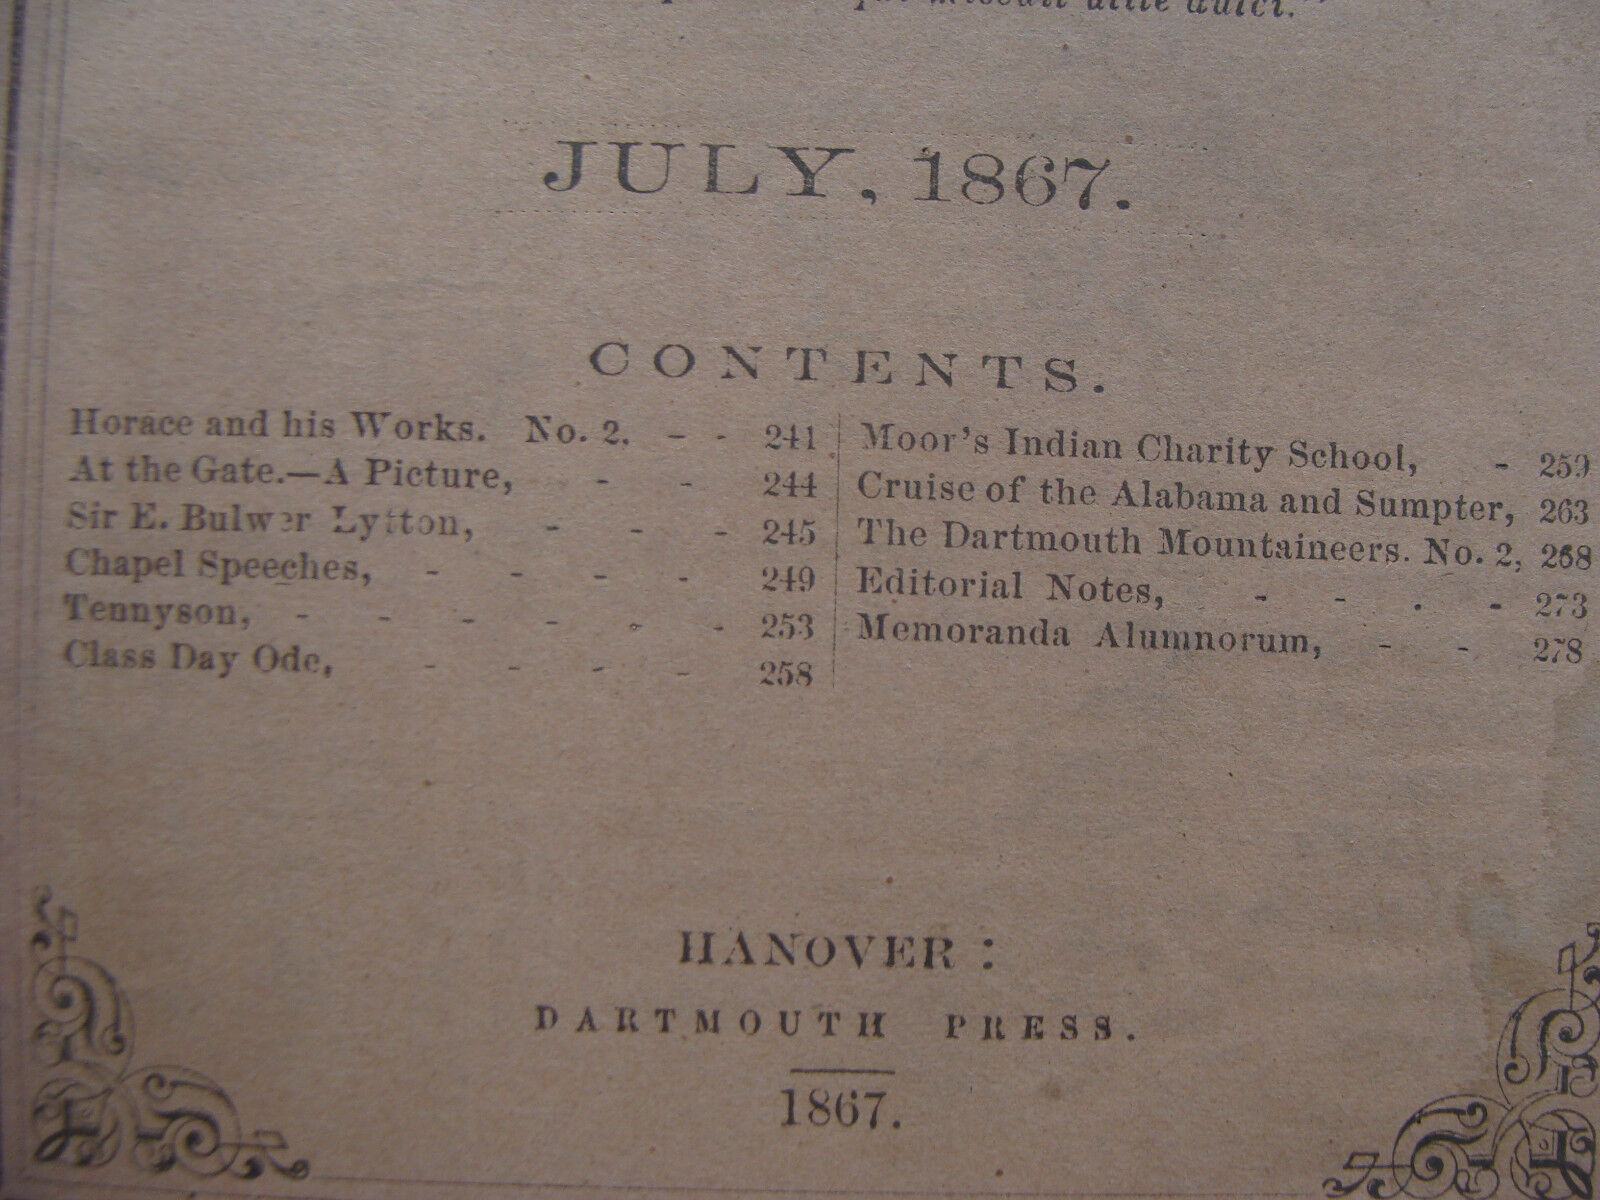 original DARTMOUTH COLLEGE -- july 1867 -- THE DARTMOUTH - 40pgs 